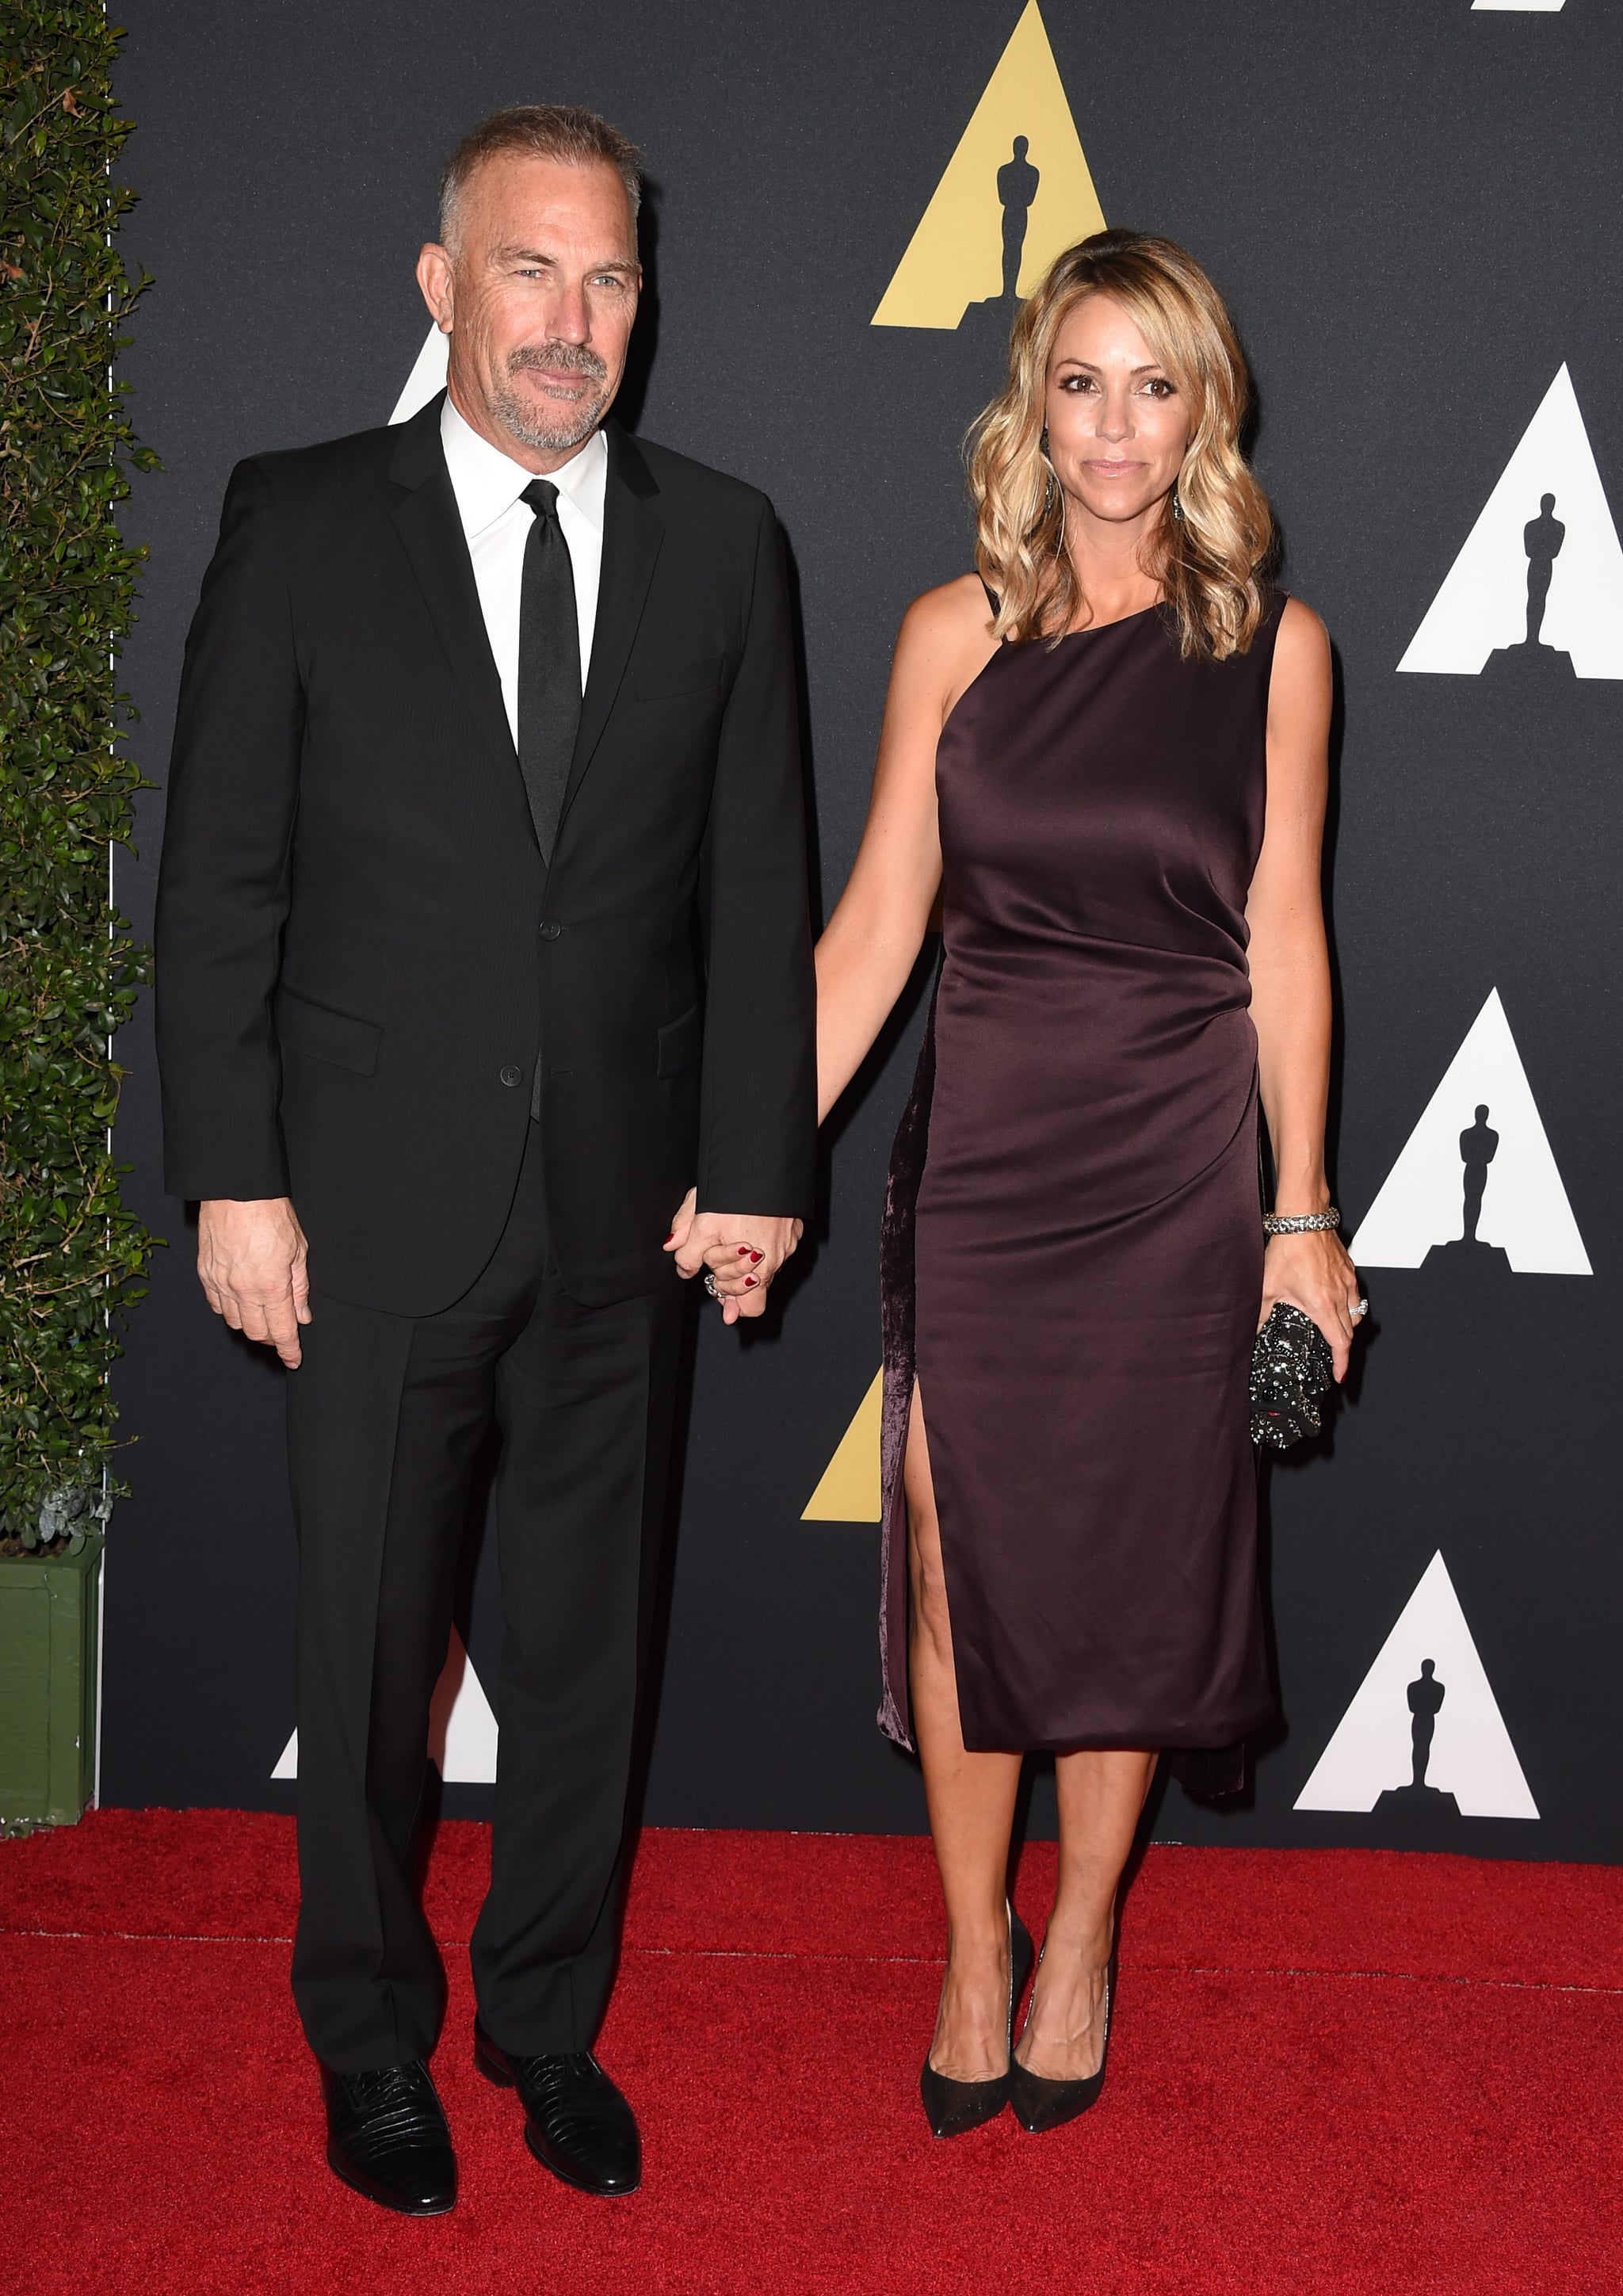 Christine Baumgartner wearing a black silk dress, holding hands with Kevin Cosner at an award show